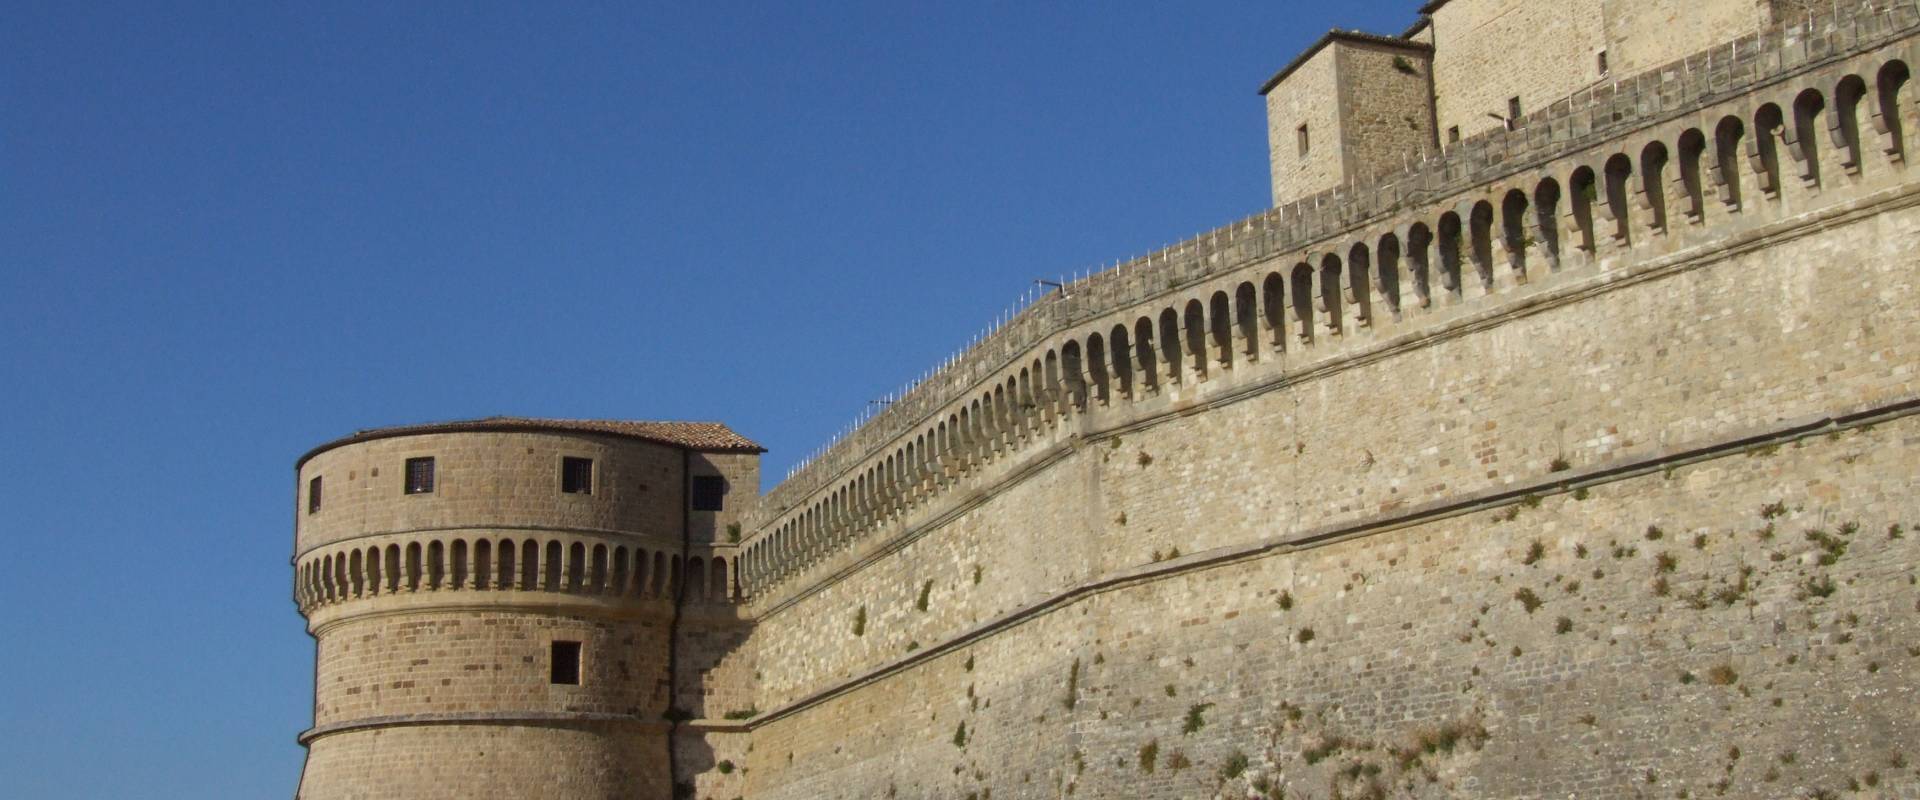 Fortezza di San Leo - 18 photo by Diego Baglieri